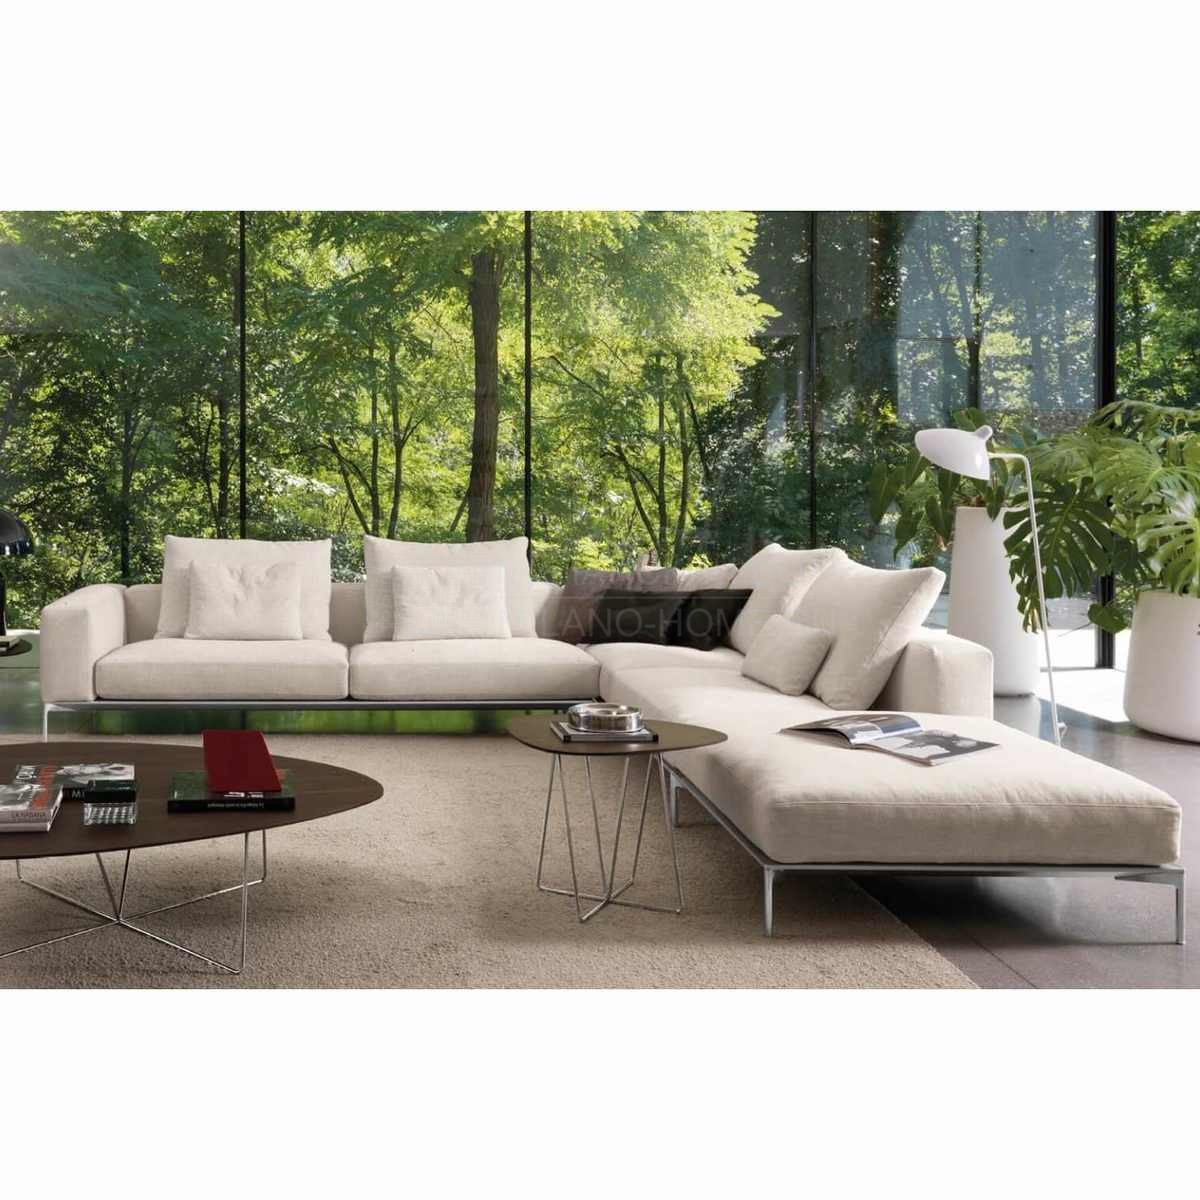 Модульный диван Savoye sofa modular из Италии фабрики DESIREE